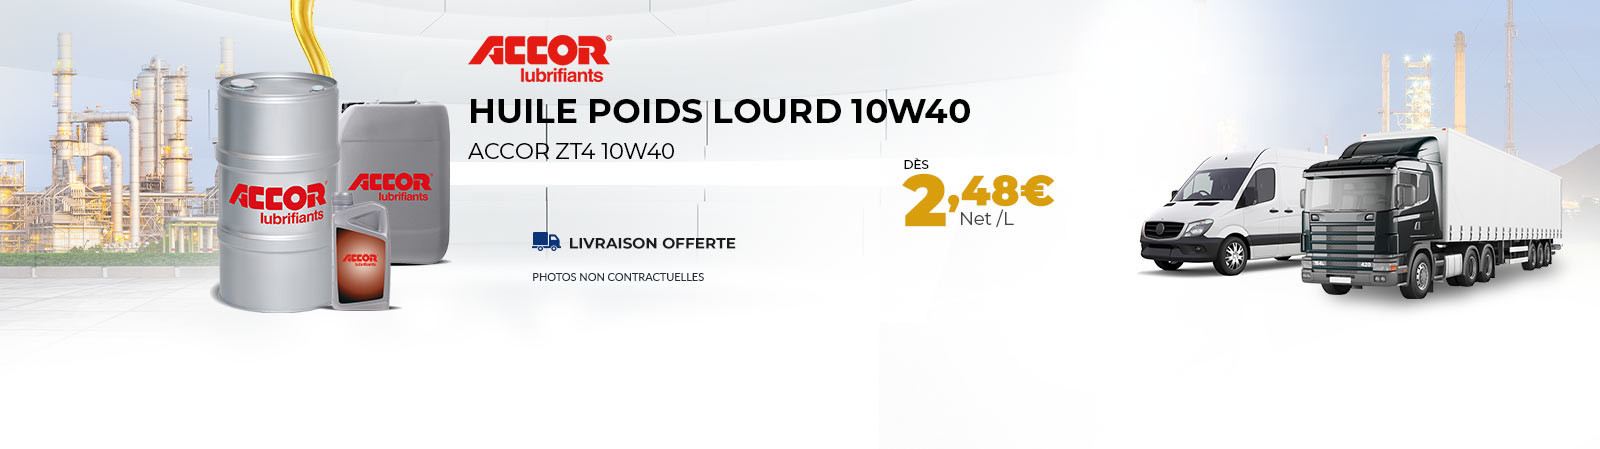 Huile Poids Lourd 10w40 dès 2.48 €/l PORT OFFERT